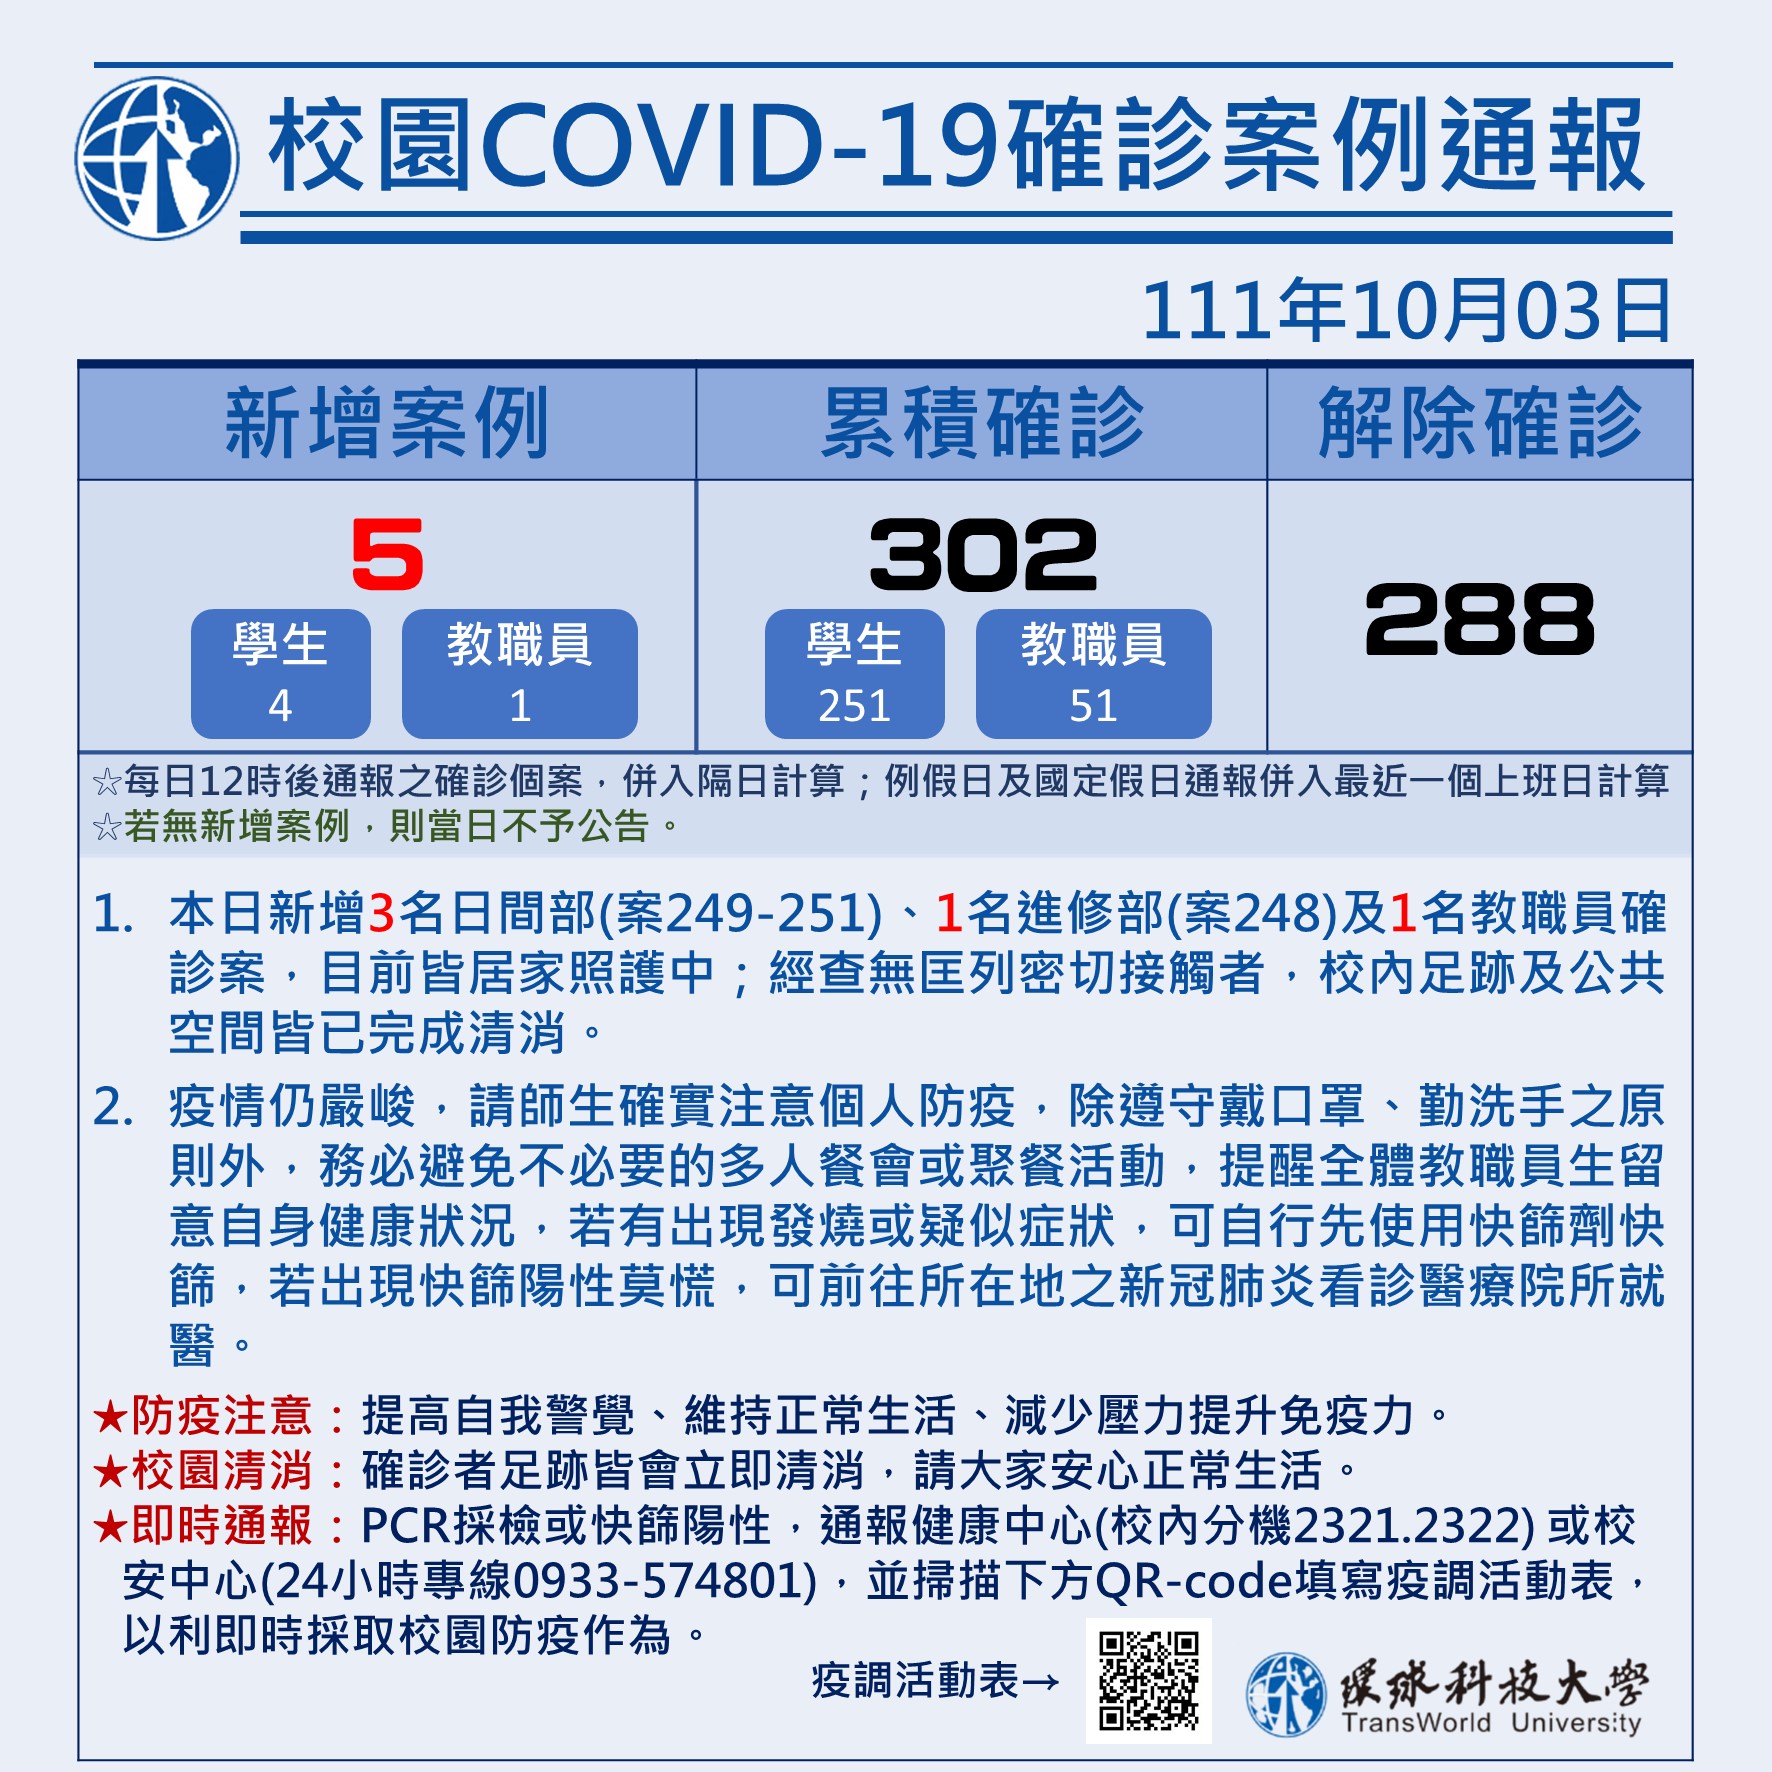 校園COVID-19案例統計1003